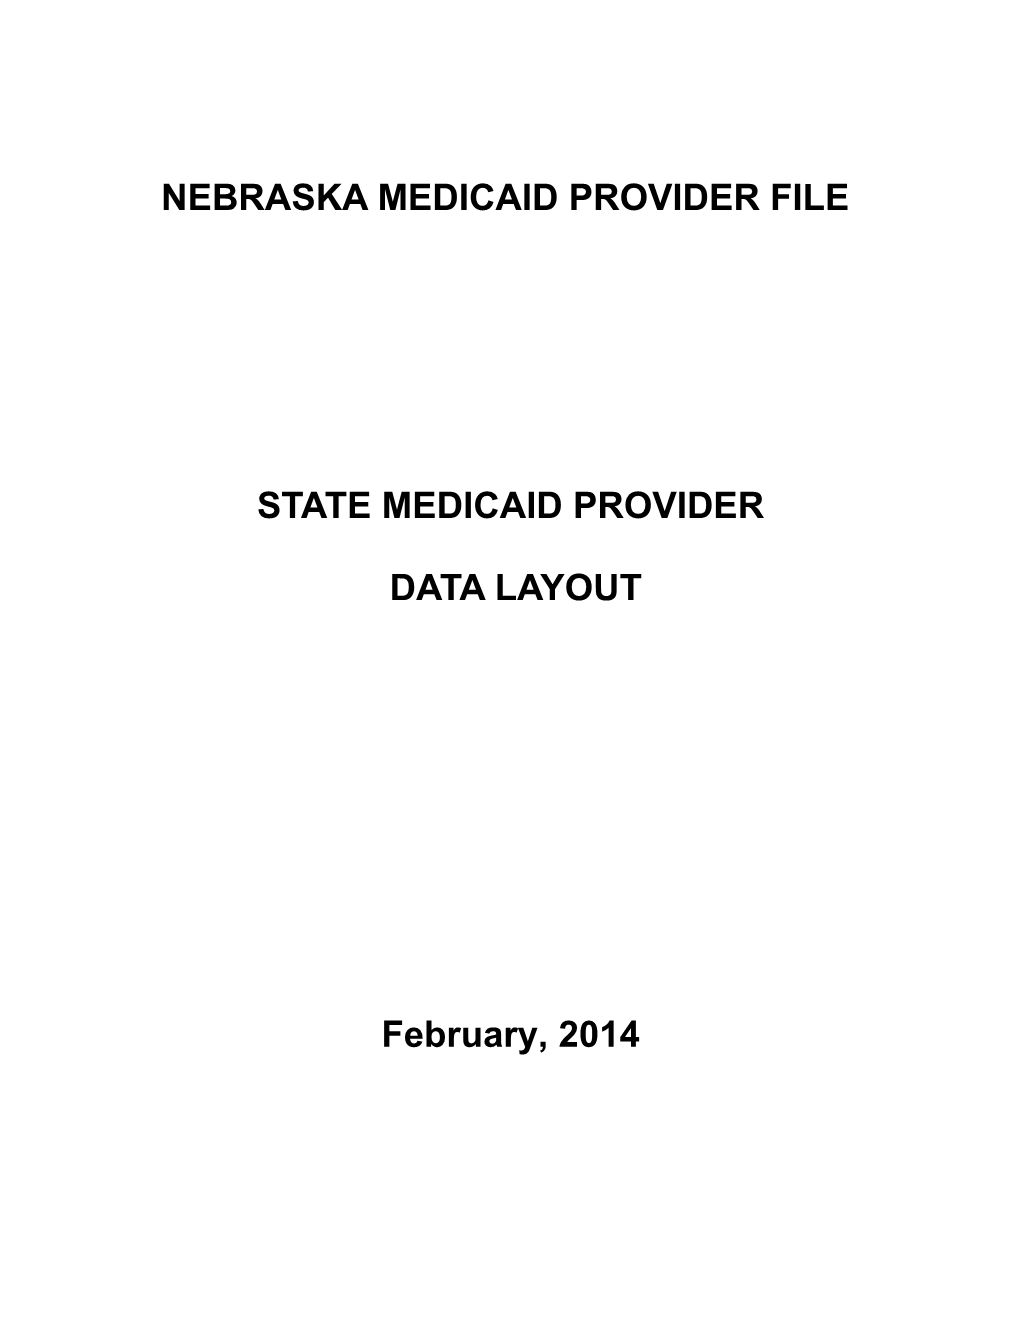 Nebraska Medicaid PROVIDER FILE